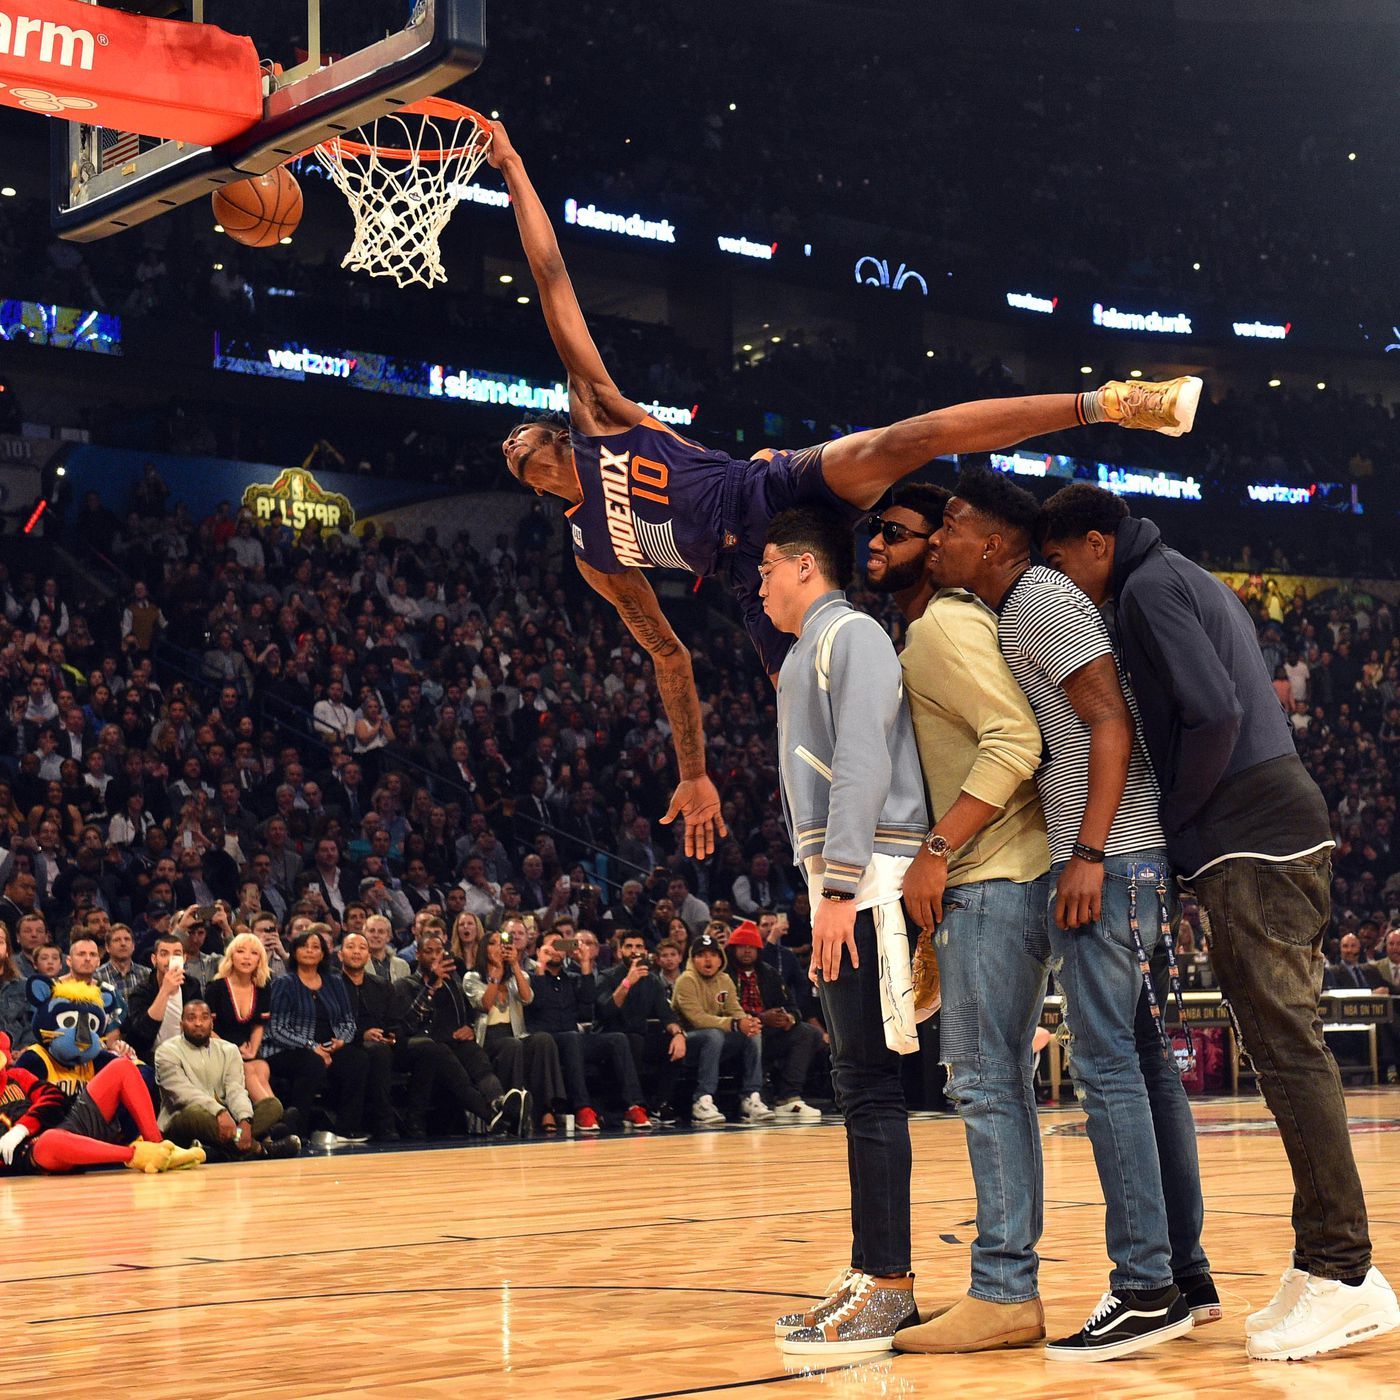 NBA dunk contest: Former Rebel Derrick Jones finished second